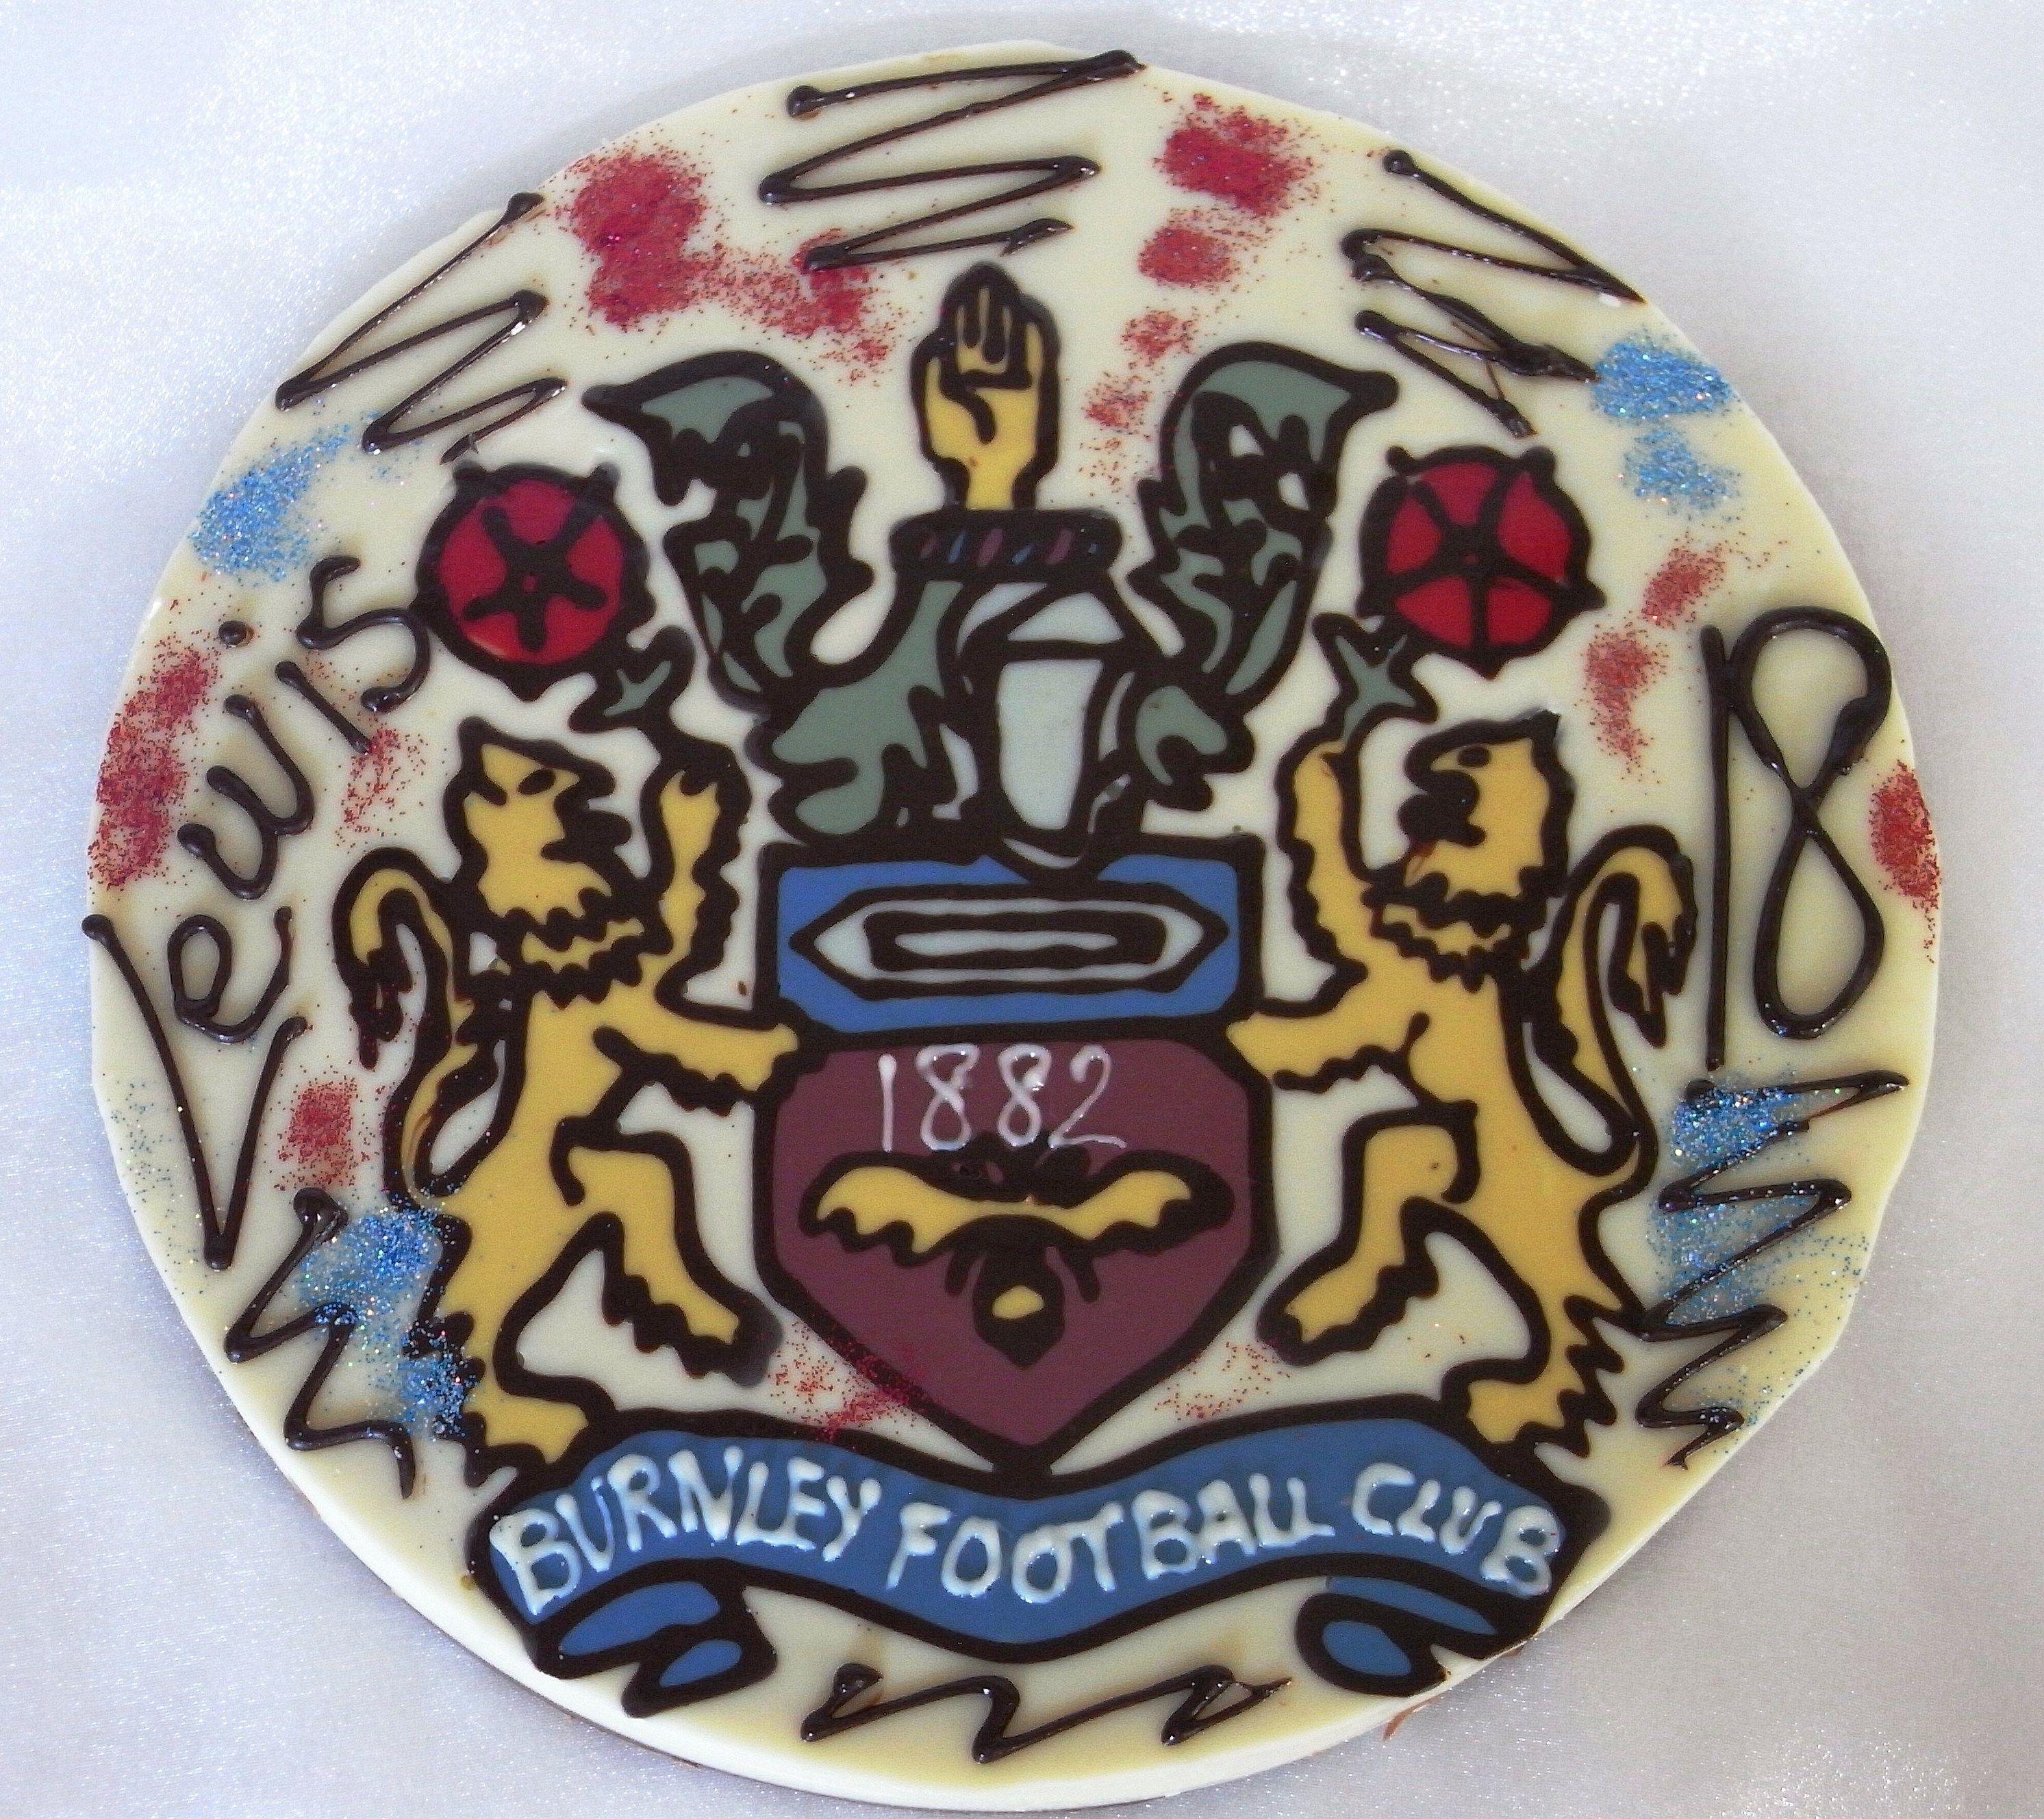 Burnley Logo - Hand-made chocolate Burnley Football Club logo plaque | Chocolate ...